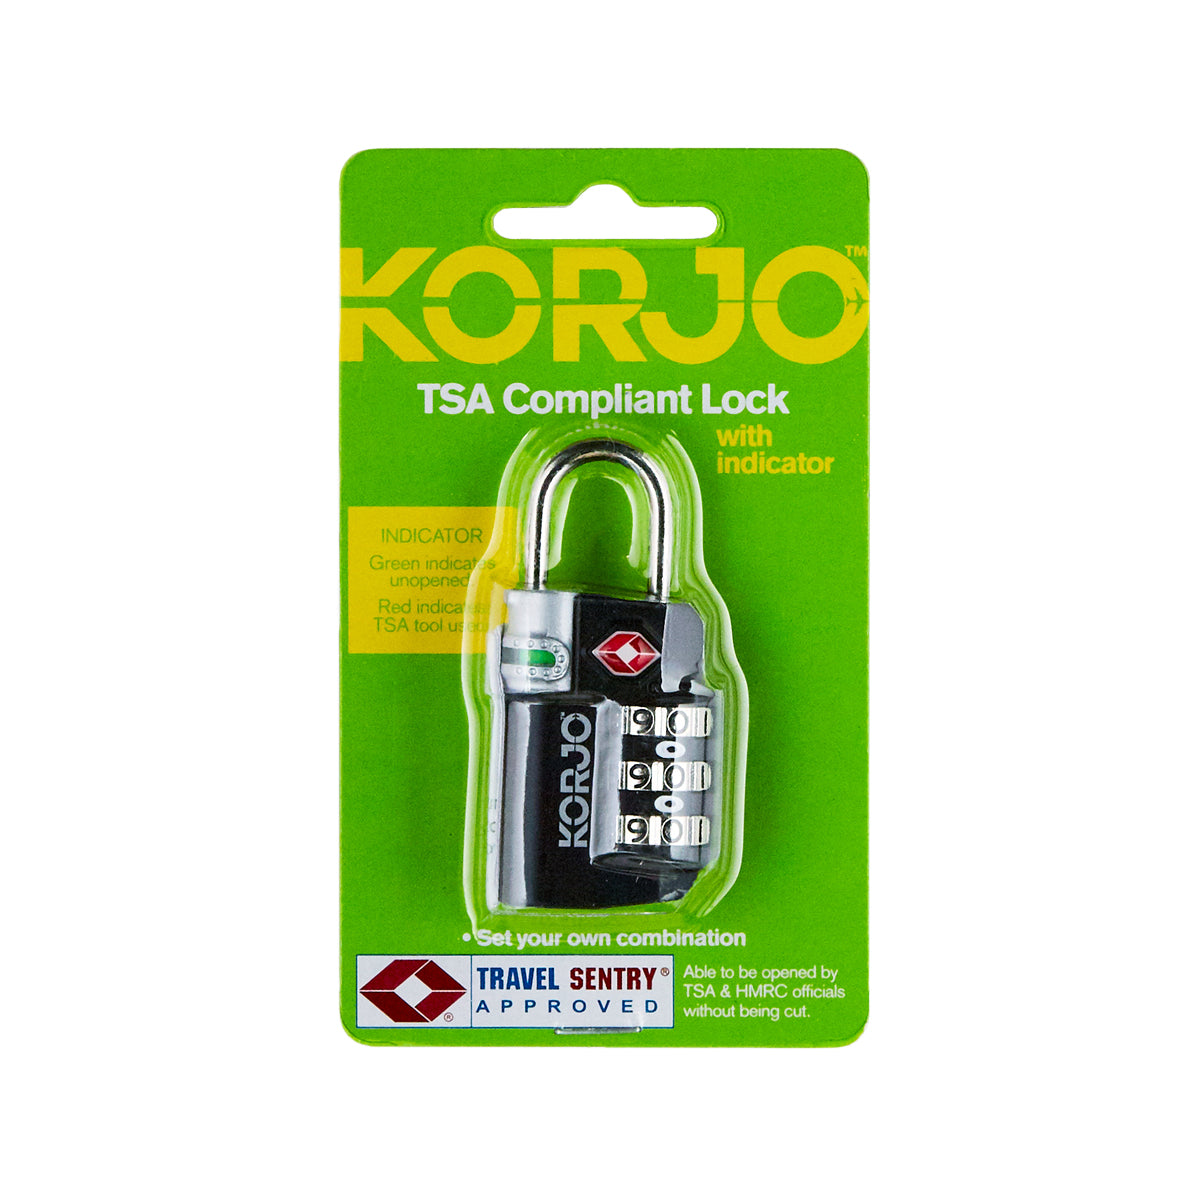 Korjo TSA Compliant Indicator Lock